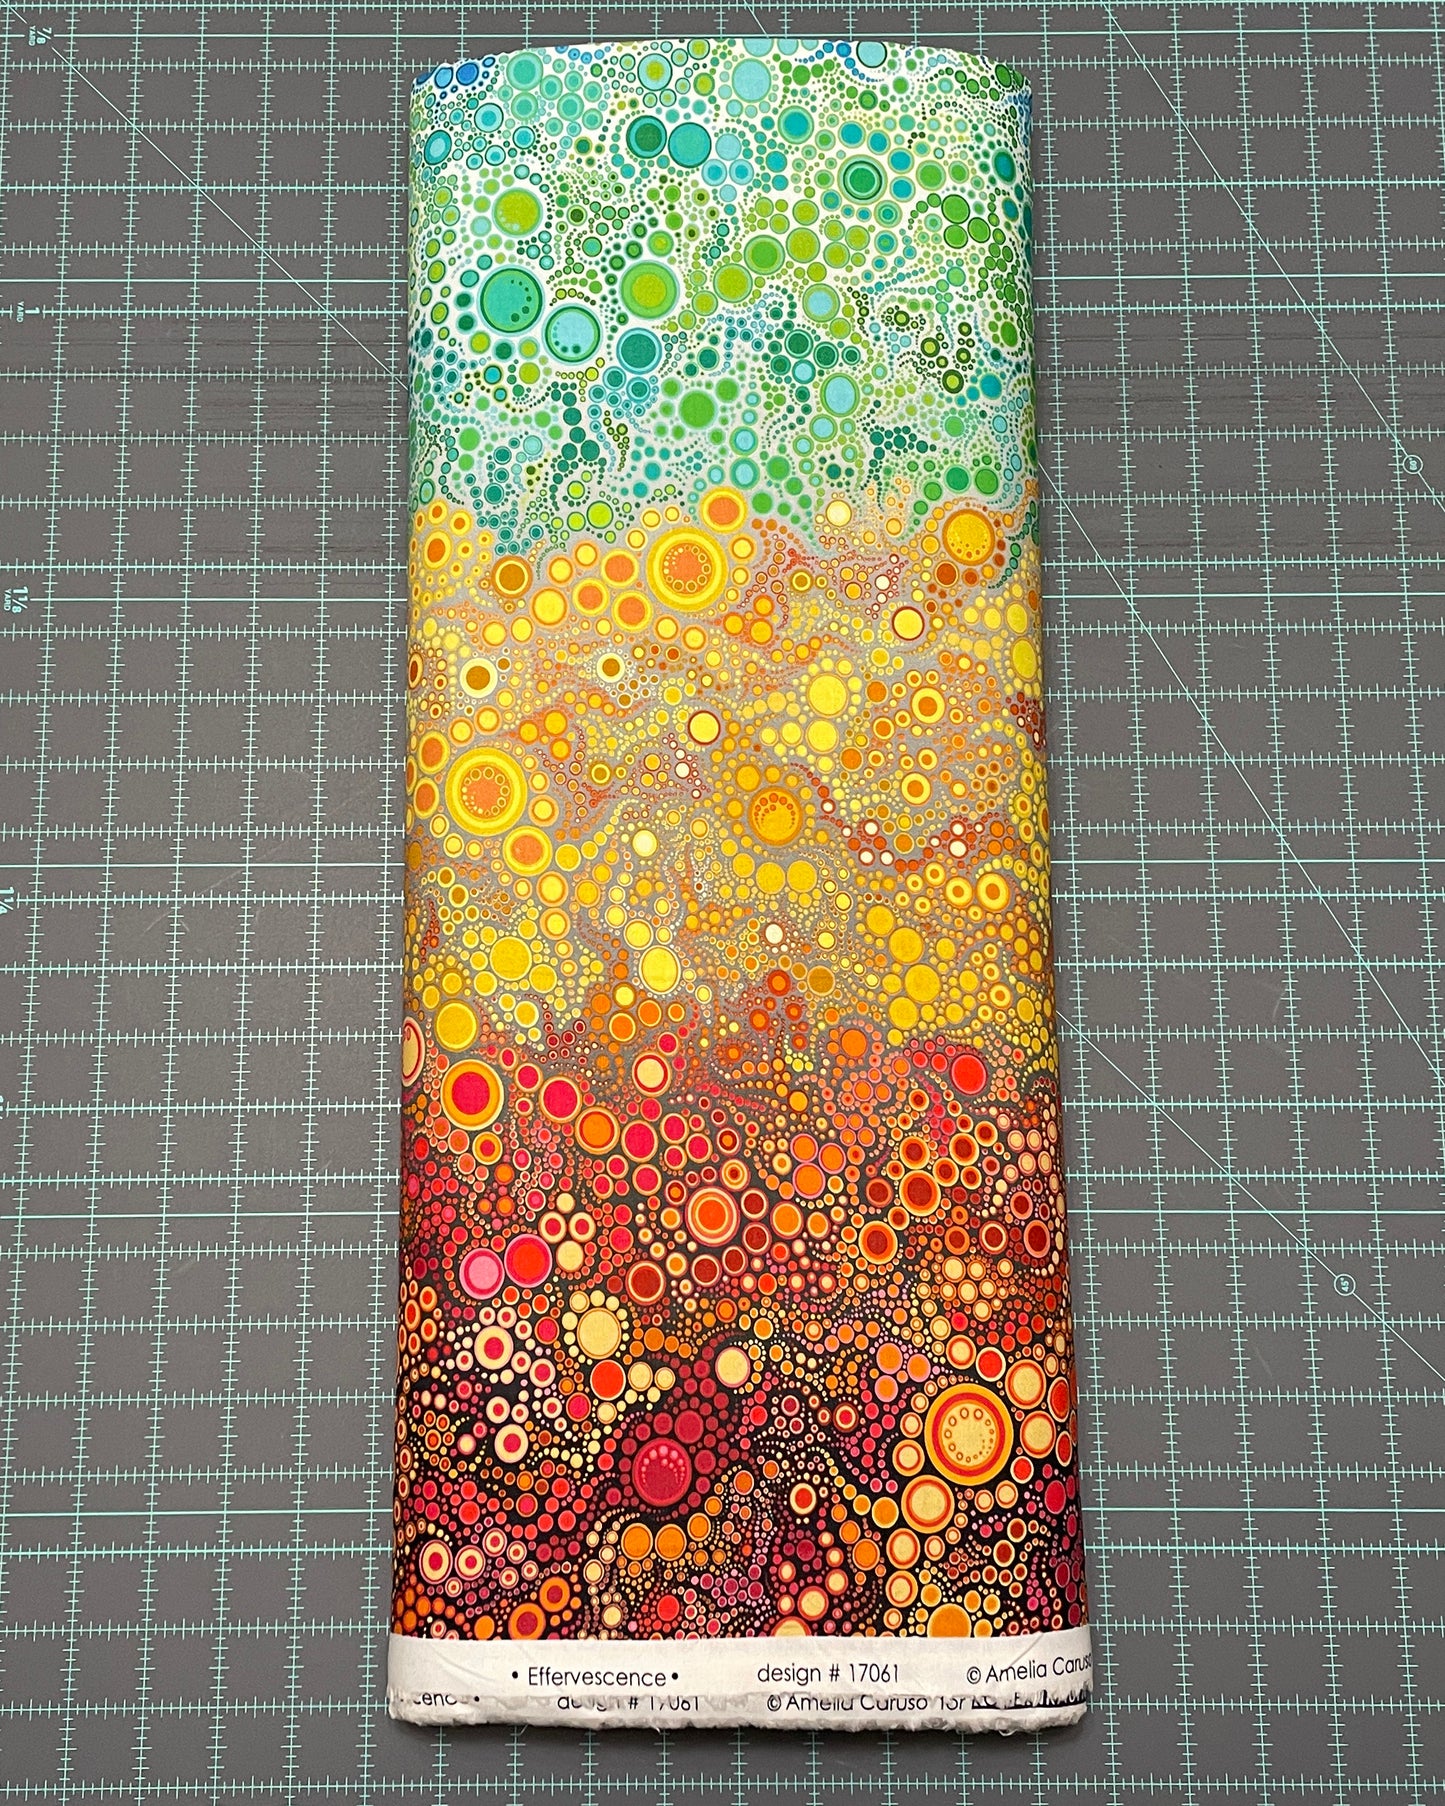 Rainbow Dots Fabric - Adventure Gradation - Robert Kaufman - Effervescence - 100% cotton